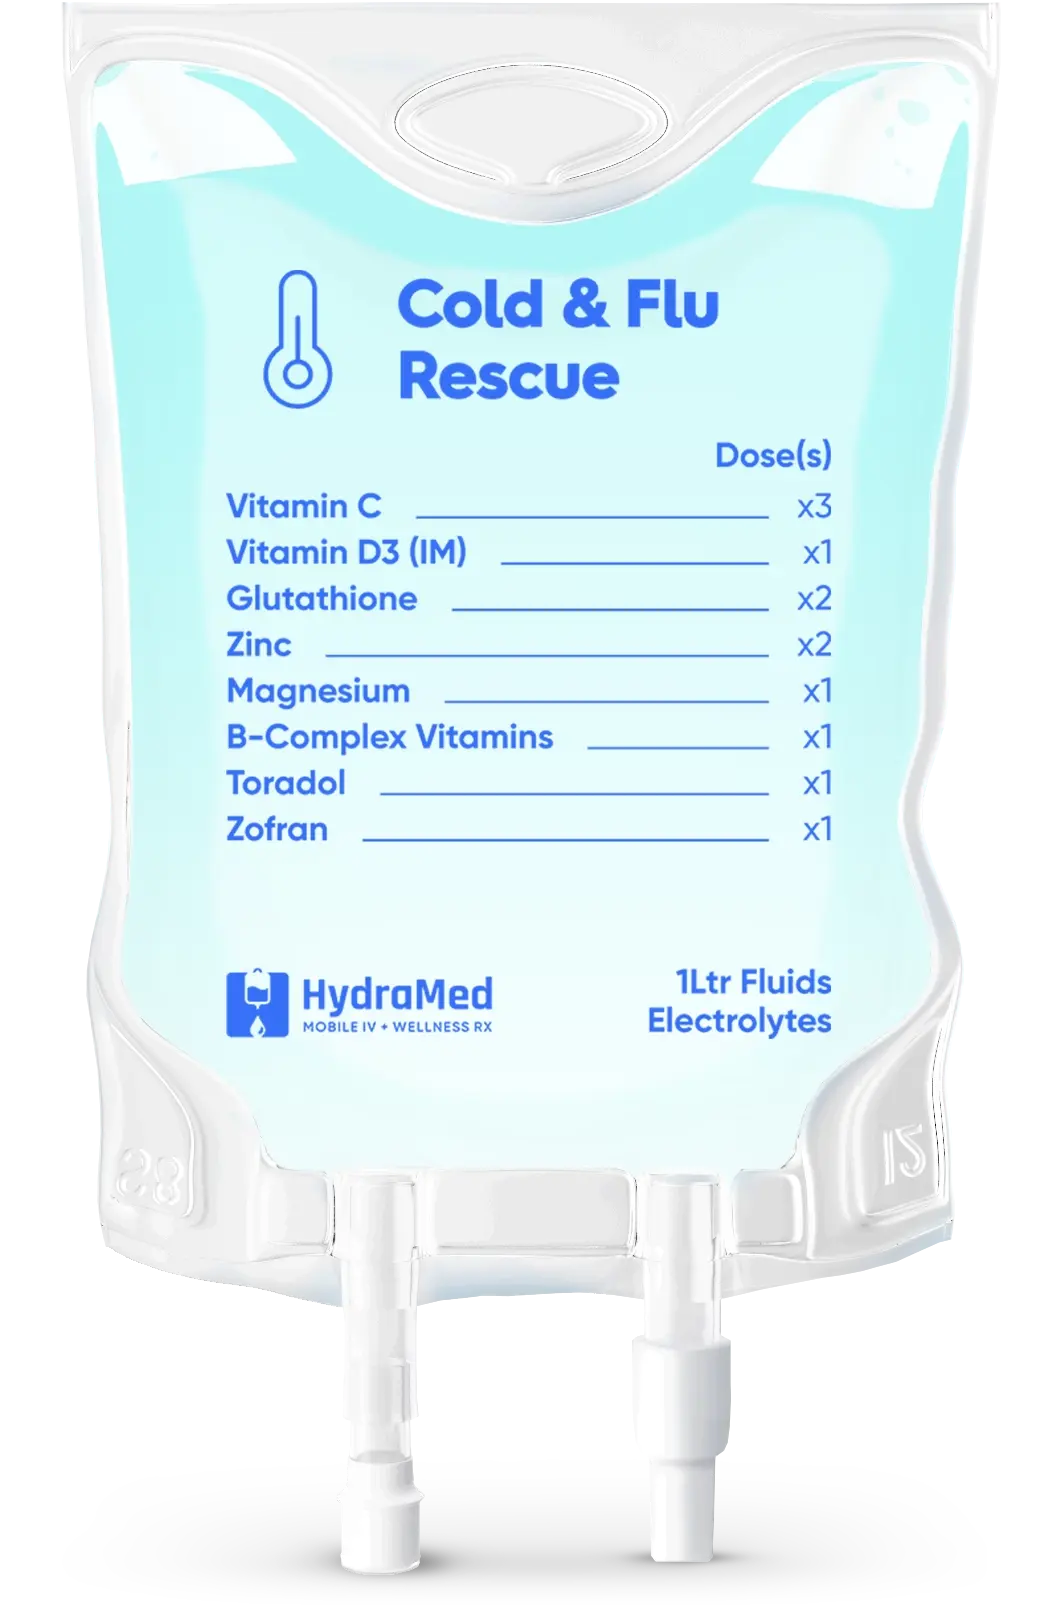 Cold & Flu Rescue